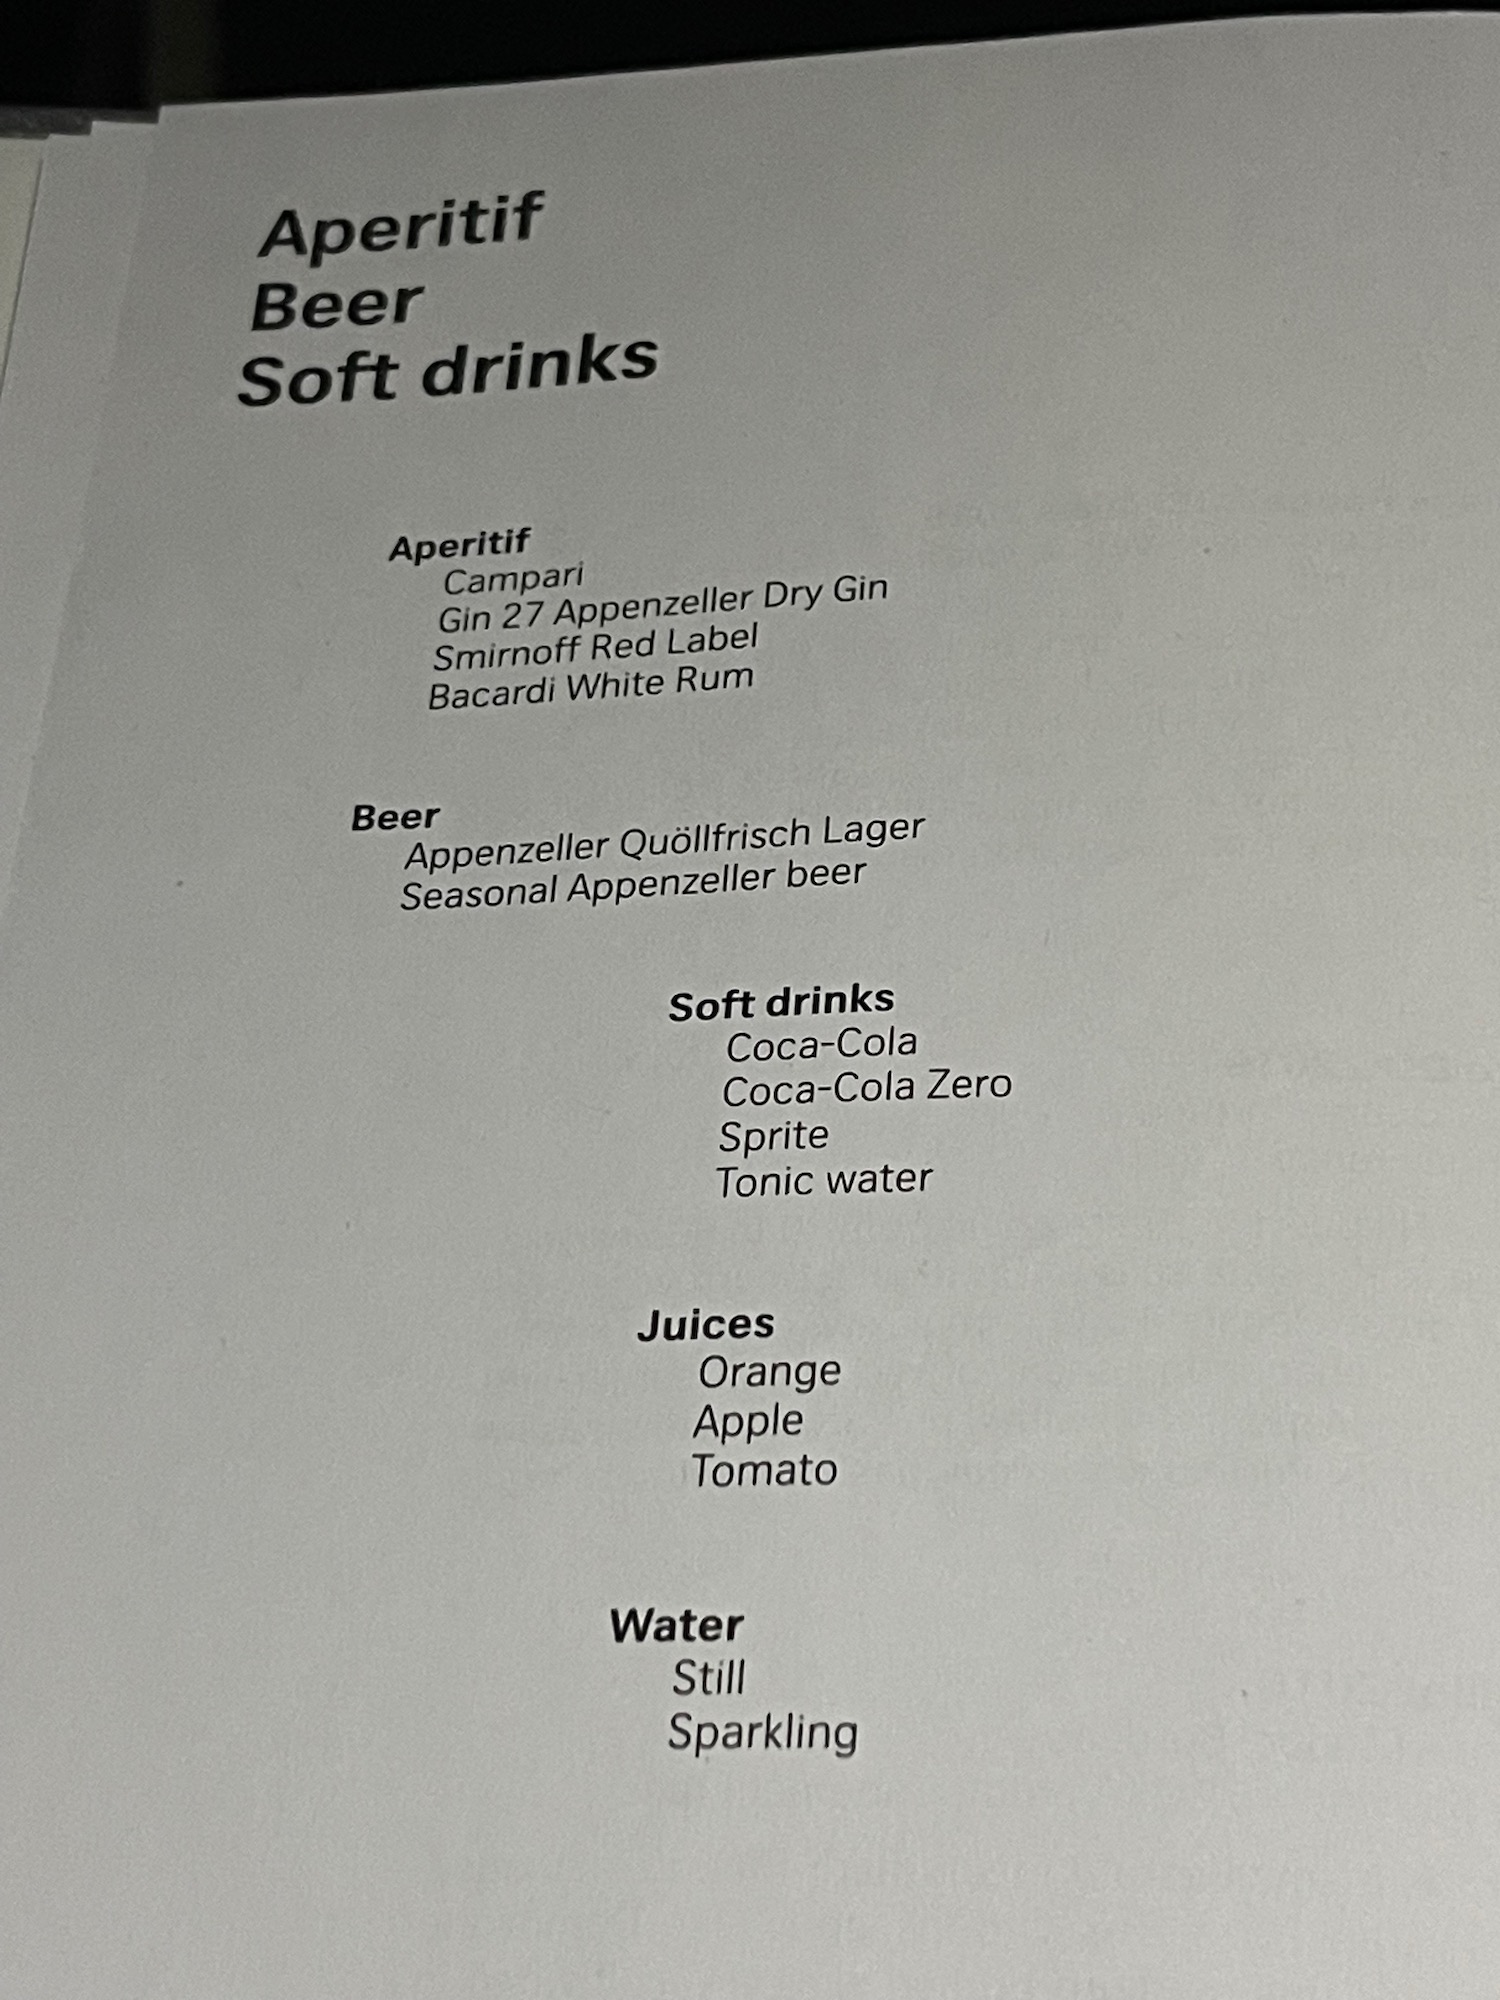 a menu of drinks